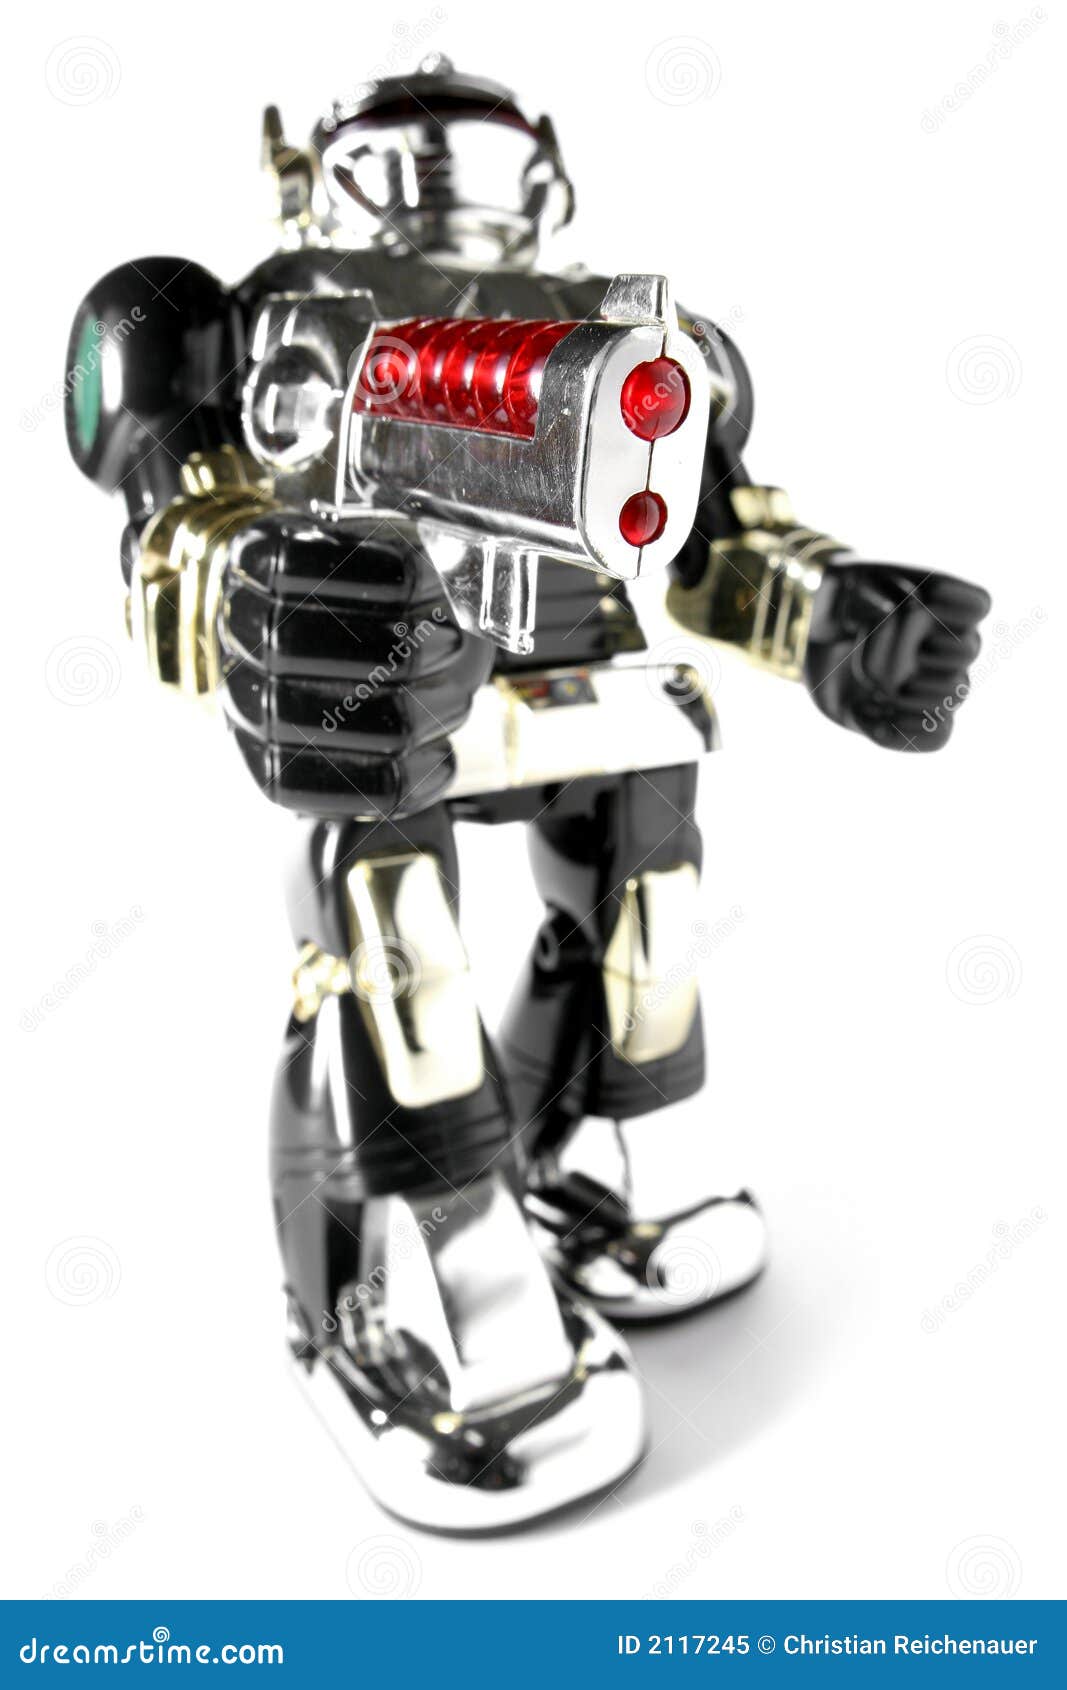 Toy Robot With Gun Fisheye Pic Stock Image - Image: 2117245